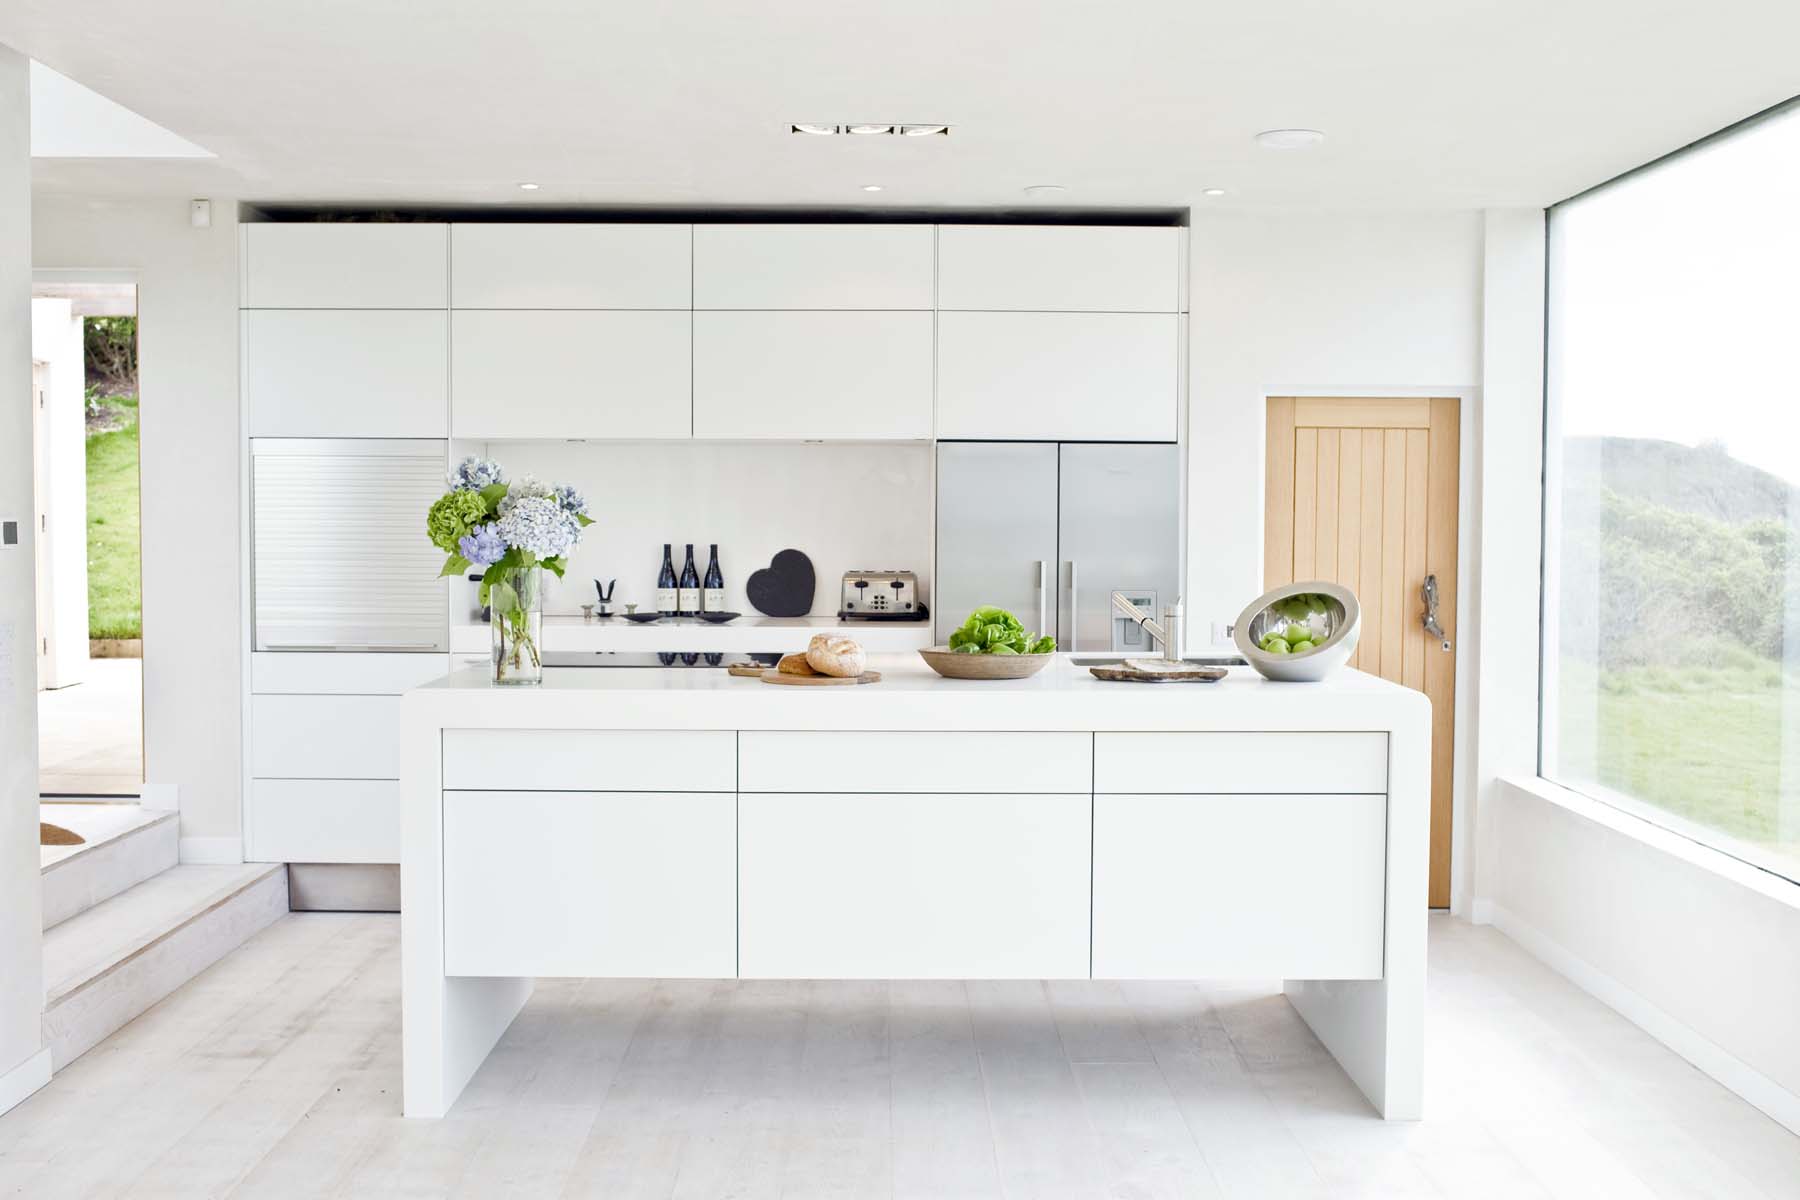 A white minimal kitchen